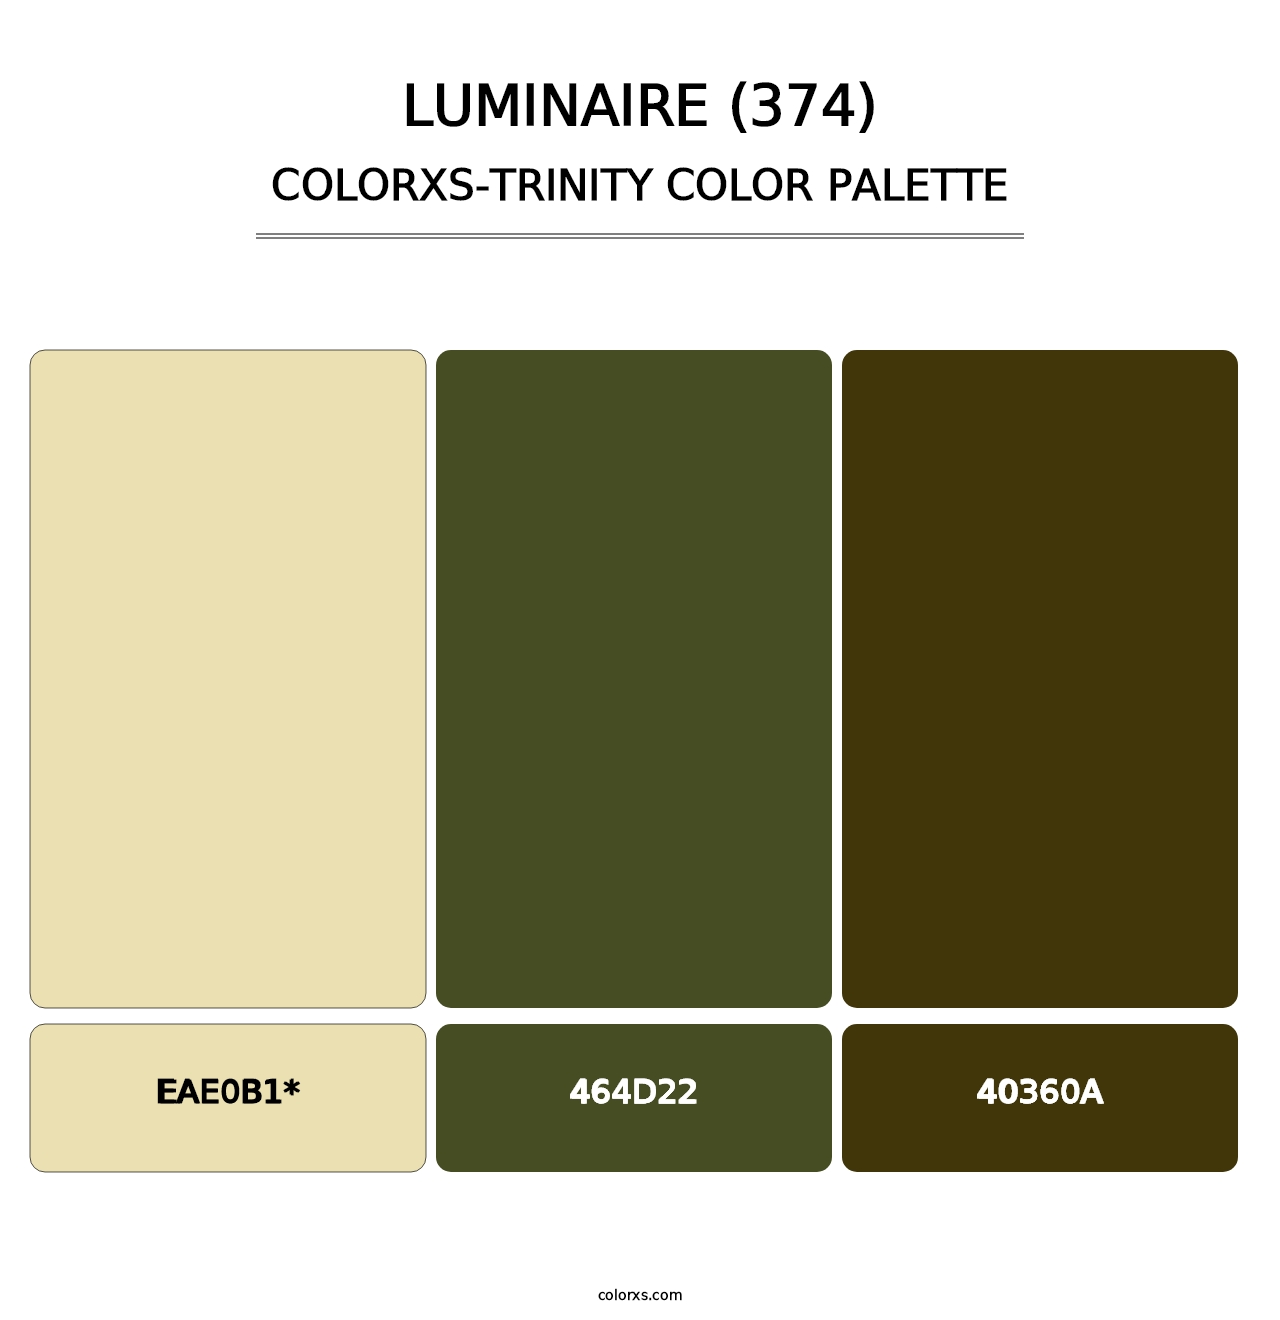 Luminaire (374) - Colorxs Trinity Palette